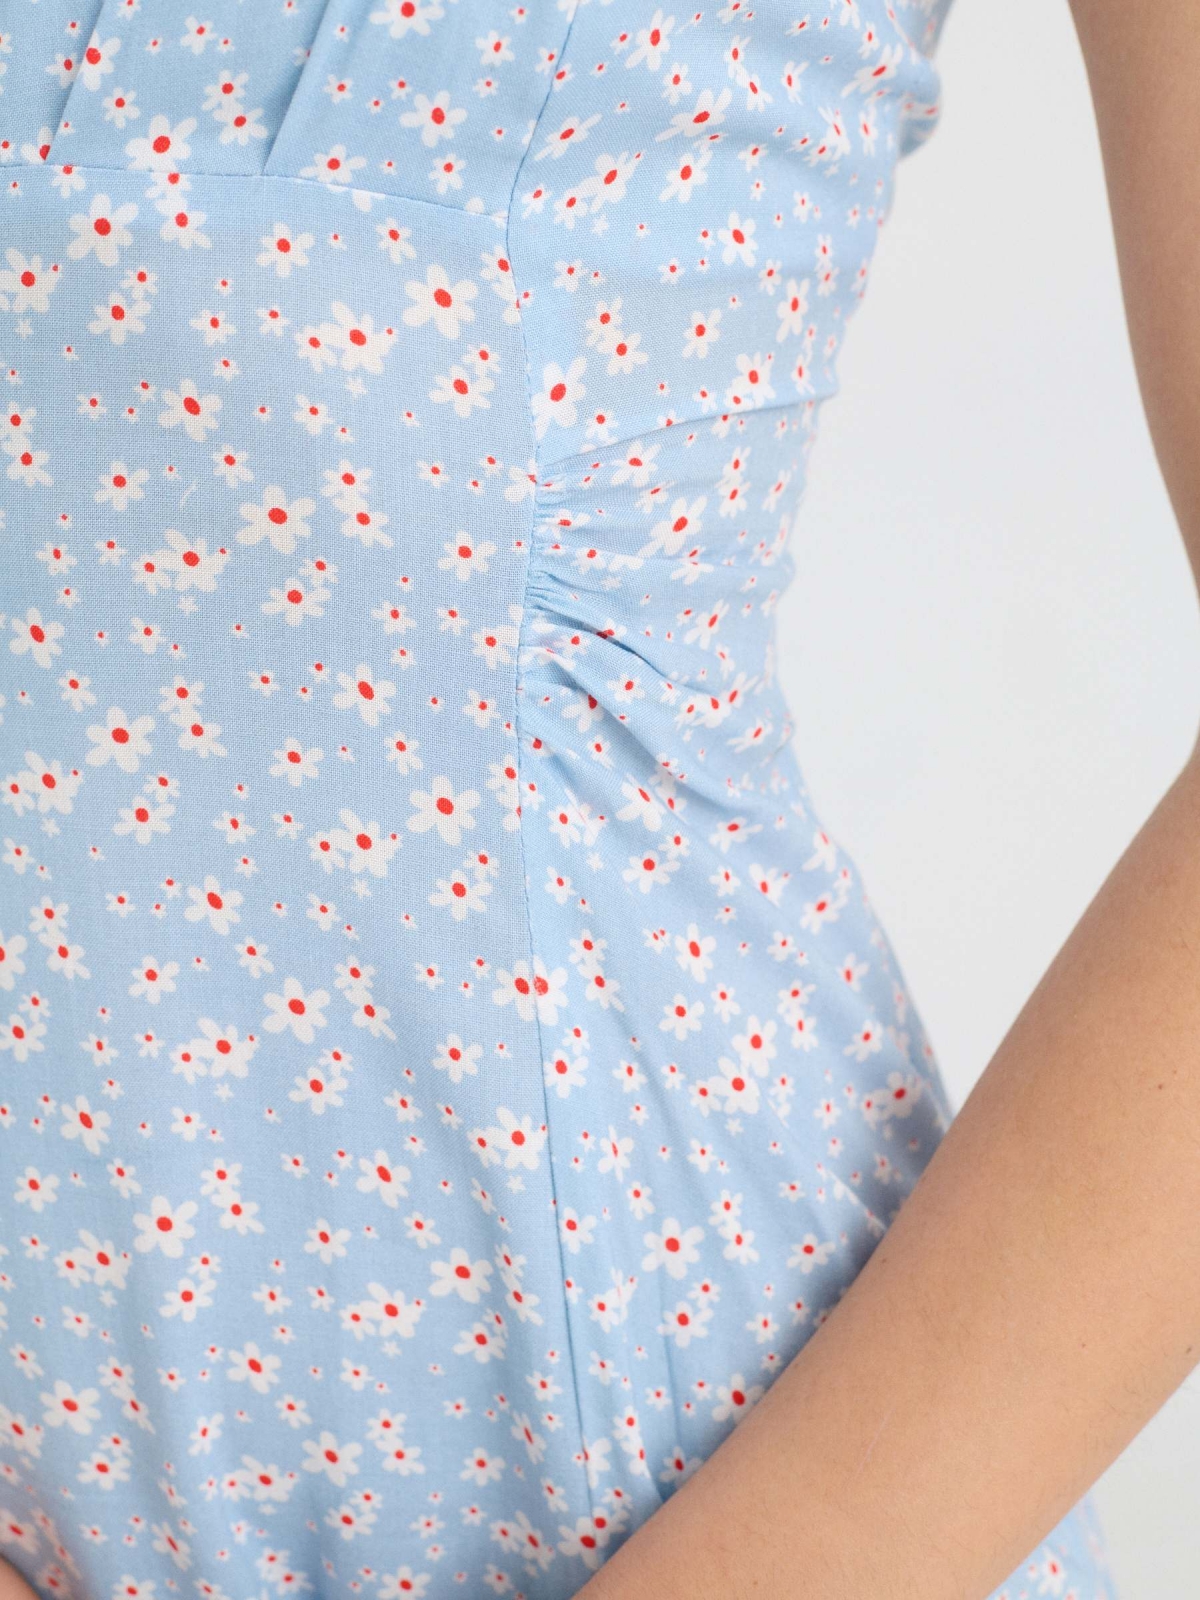 Daisy print midi dress light blue detail view